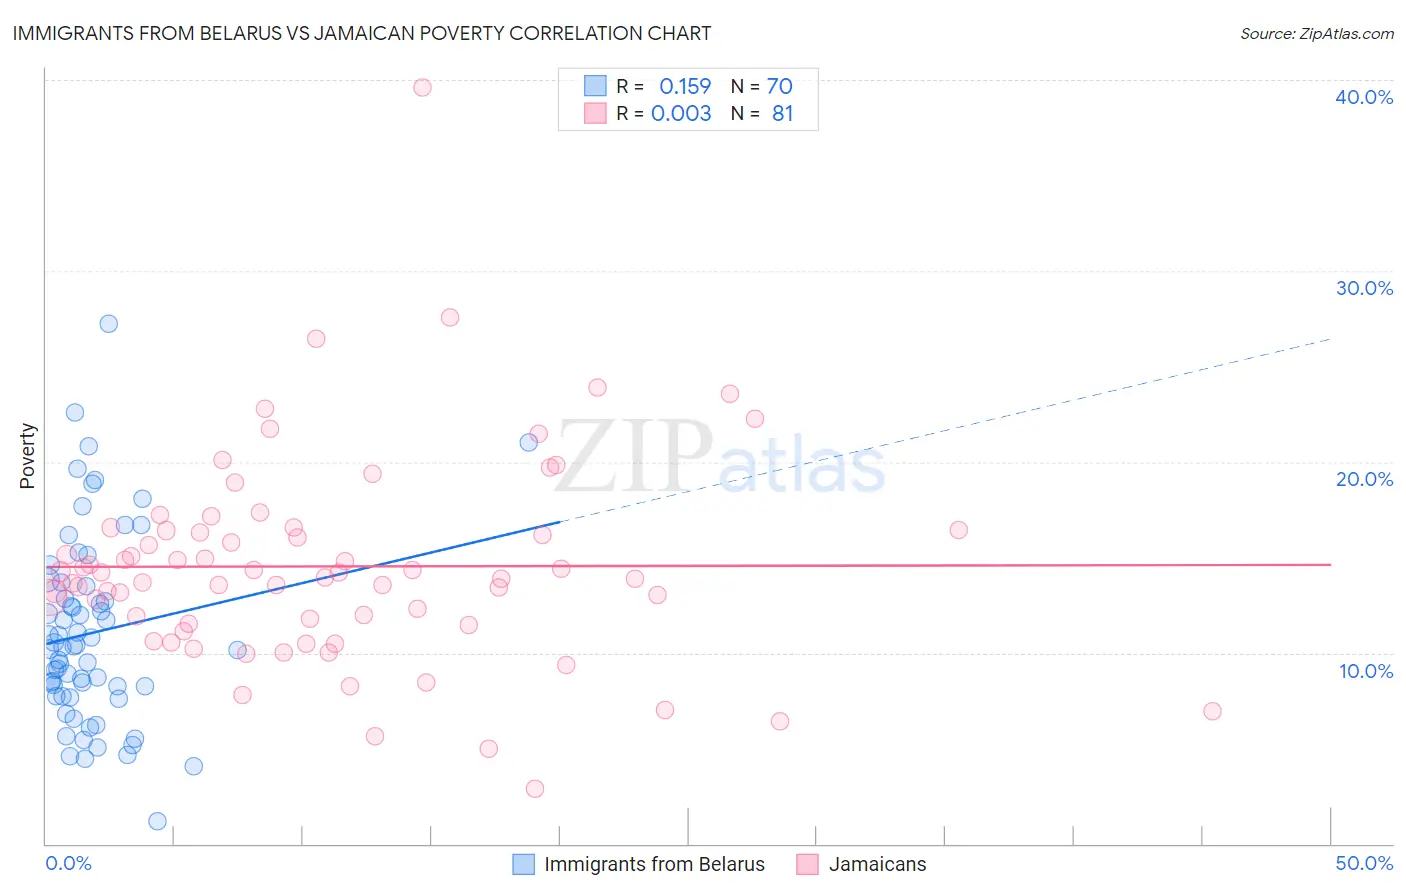 Immigrants from Belarus vs Jamaican Poverty